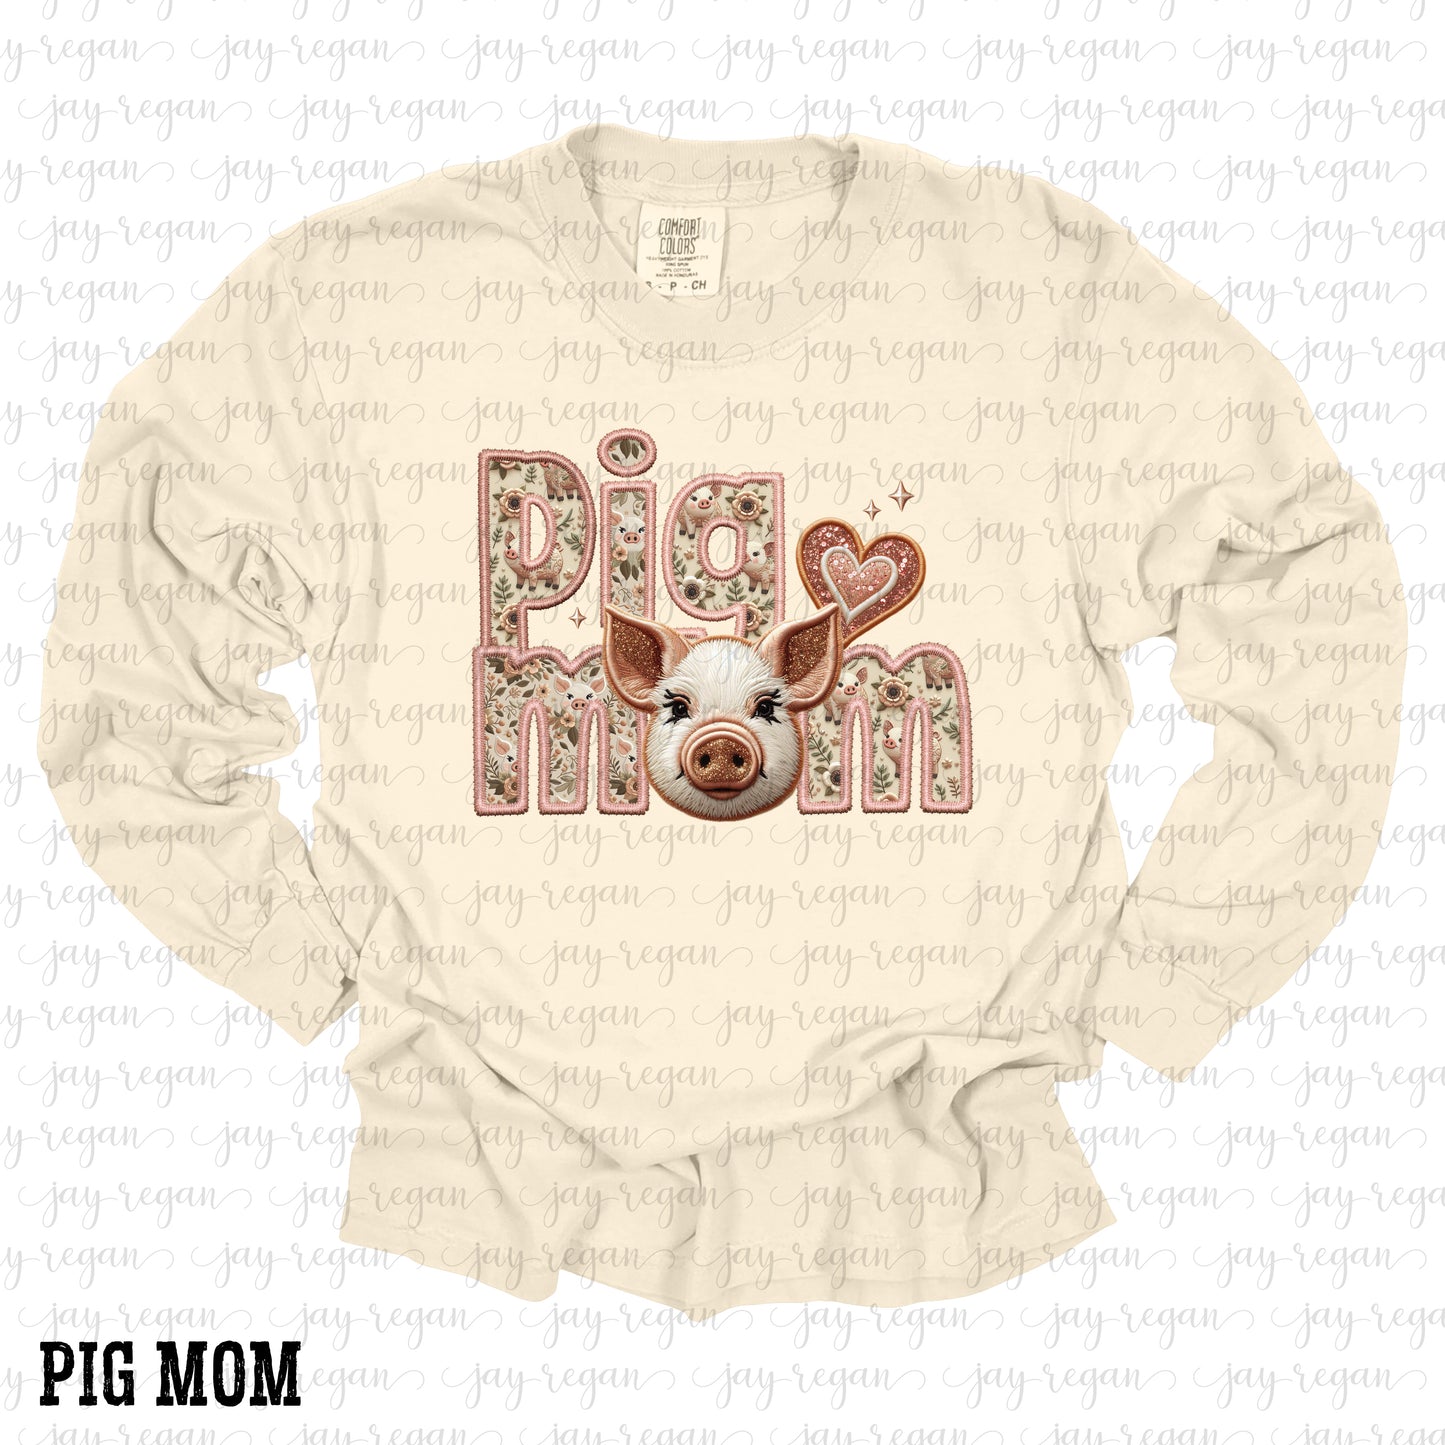 Fur Mom - Pig